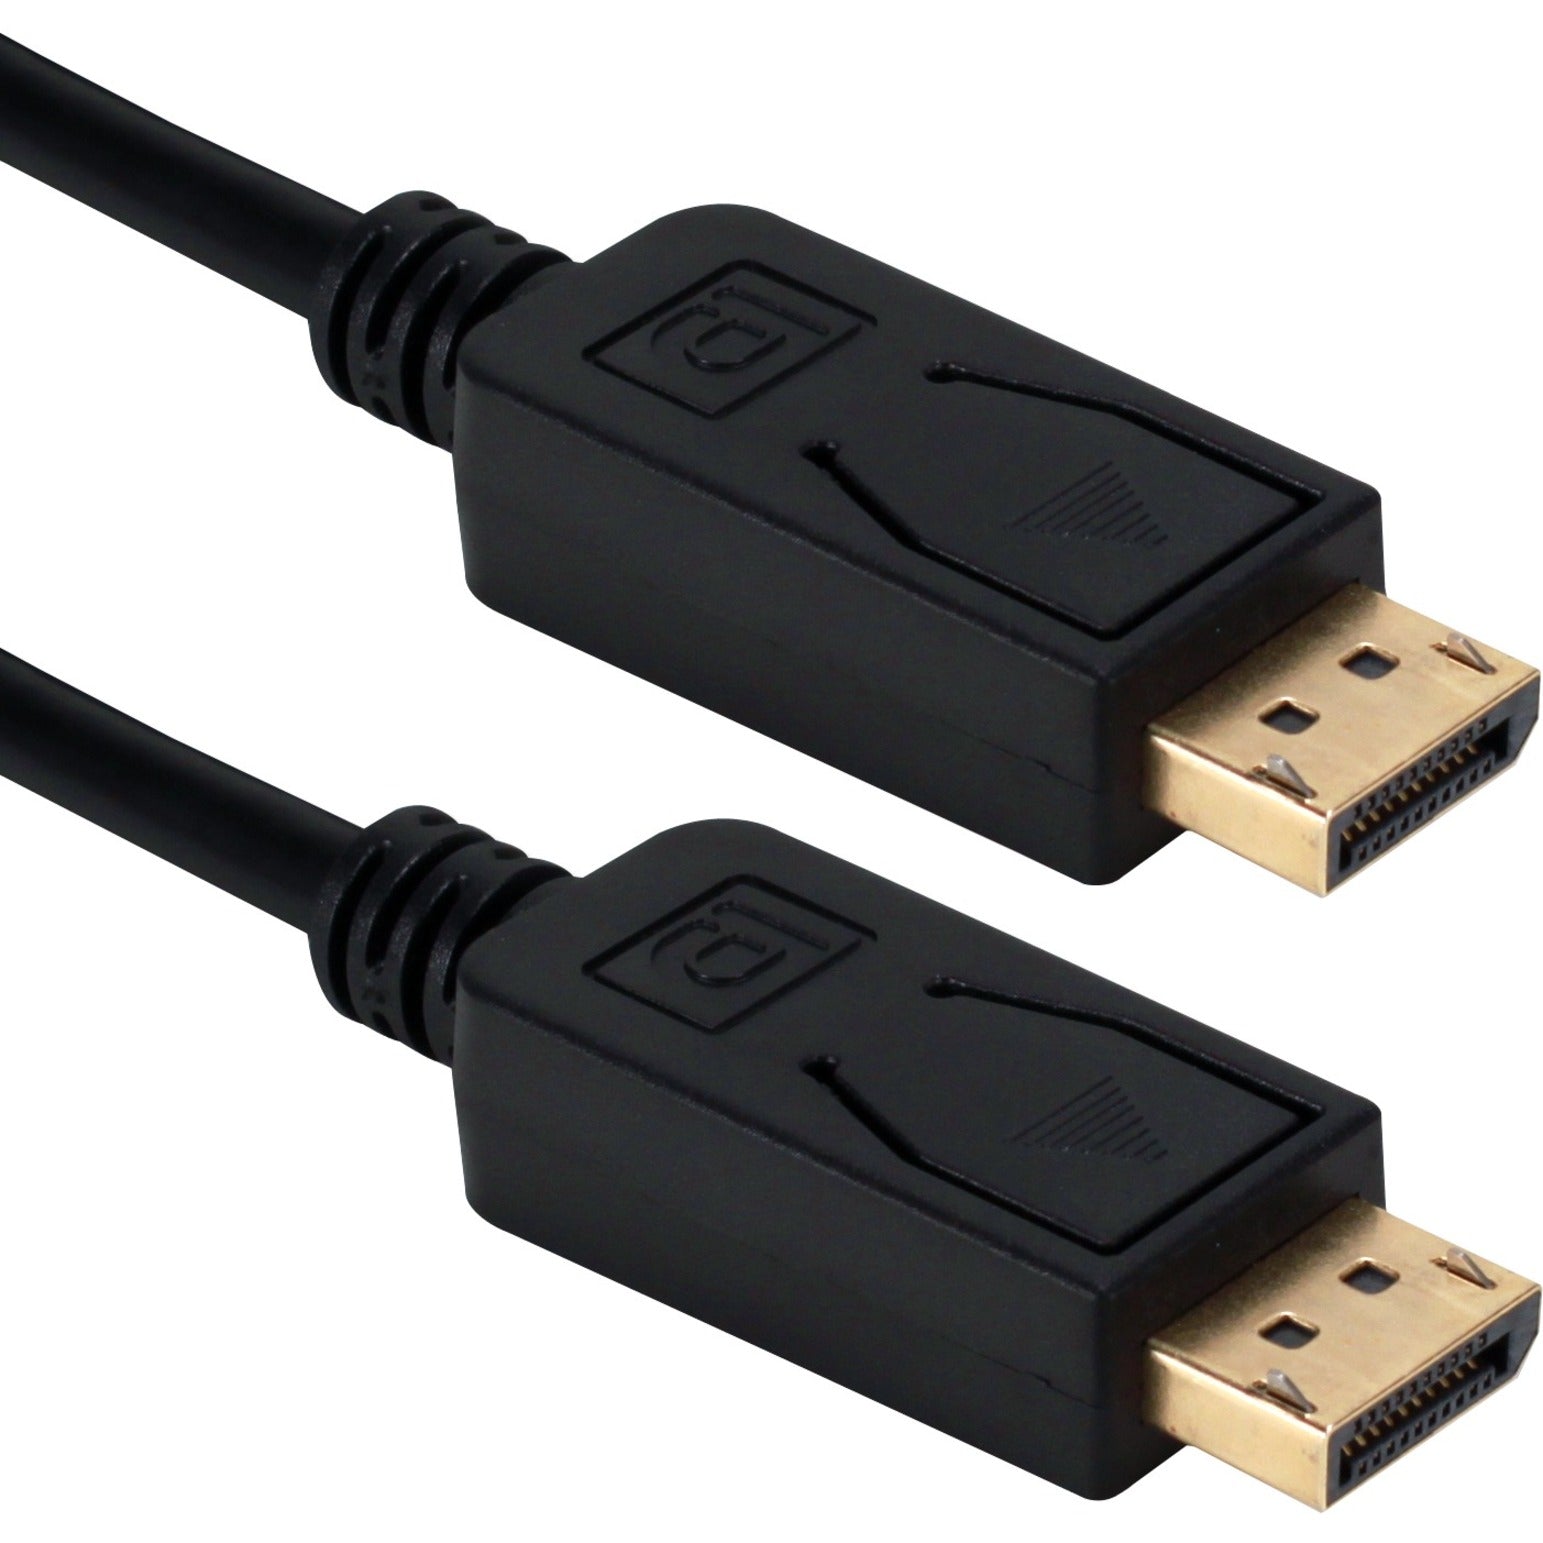 QVS DP-03 3ft DisplayPort Digital A/V Kabel mit Verriegelungen geformt geschirmt matt Schwarz